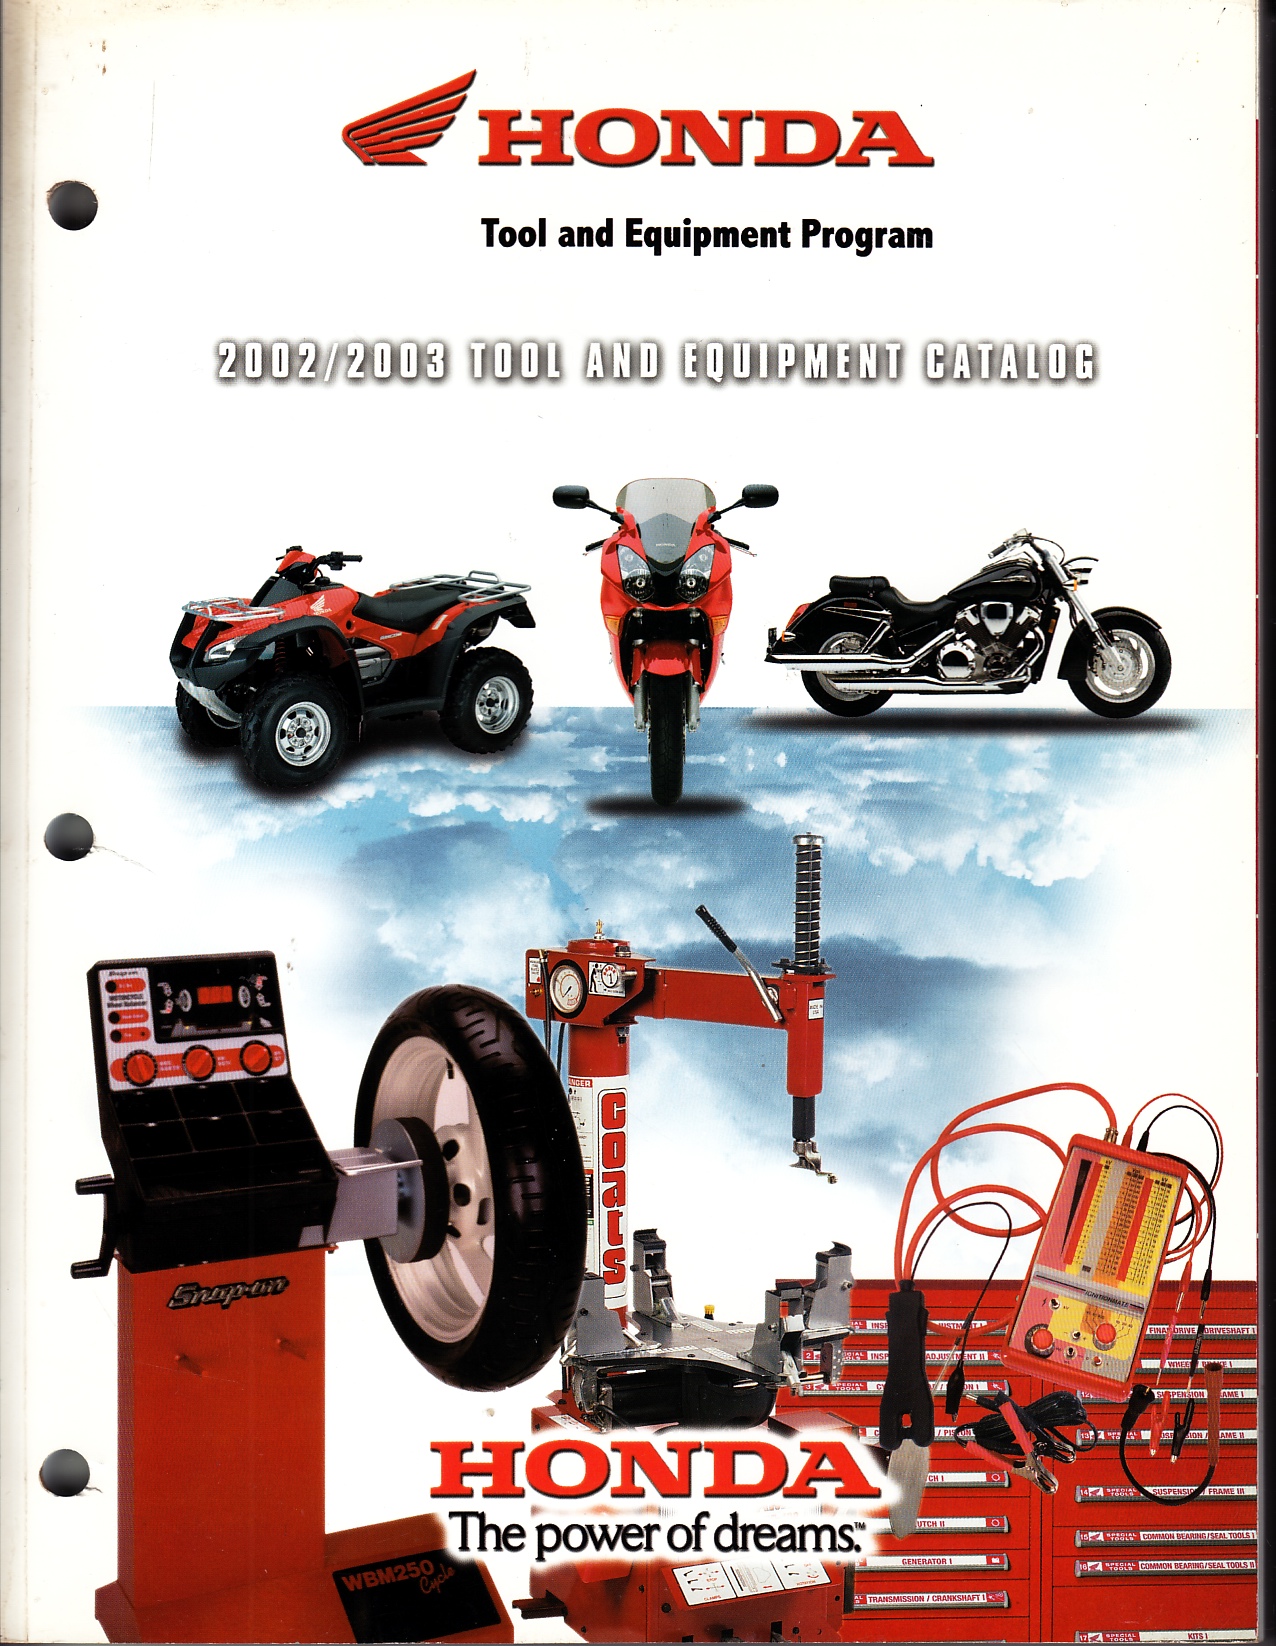 Image for Honda Tool and Equipment Program 2003 / 2003 Tool and Equipment Catalog